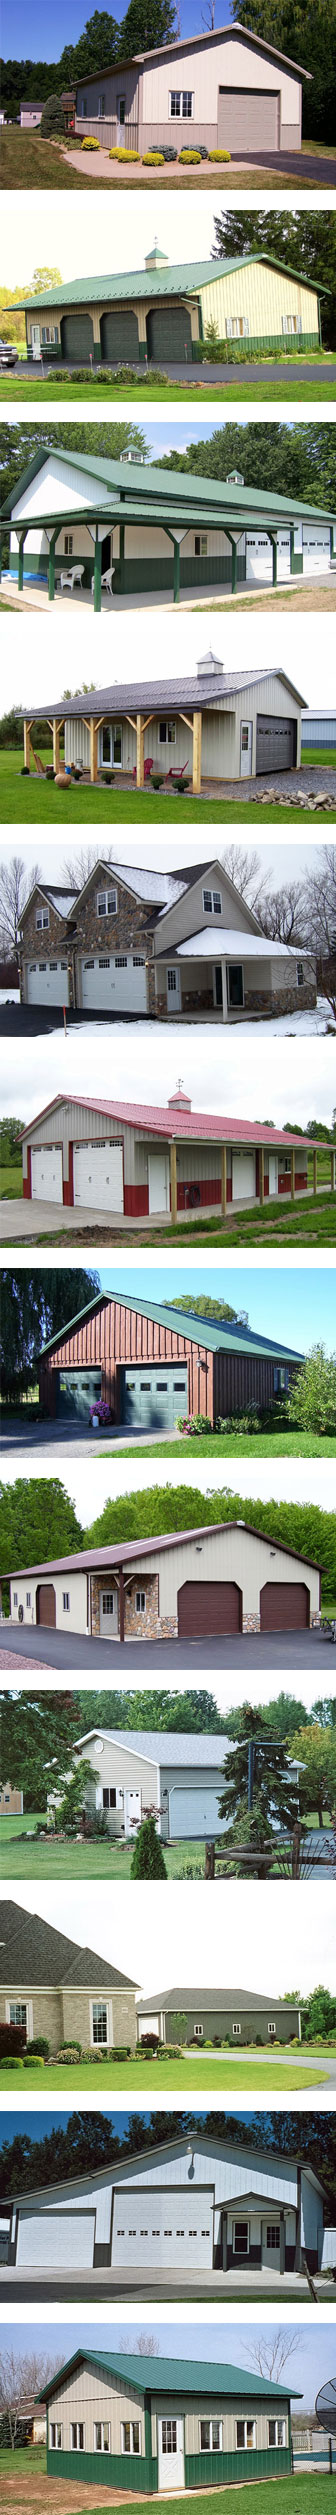 residential pole barn buildings